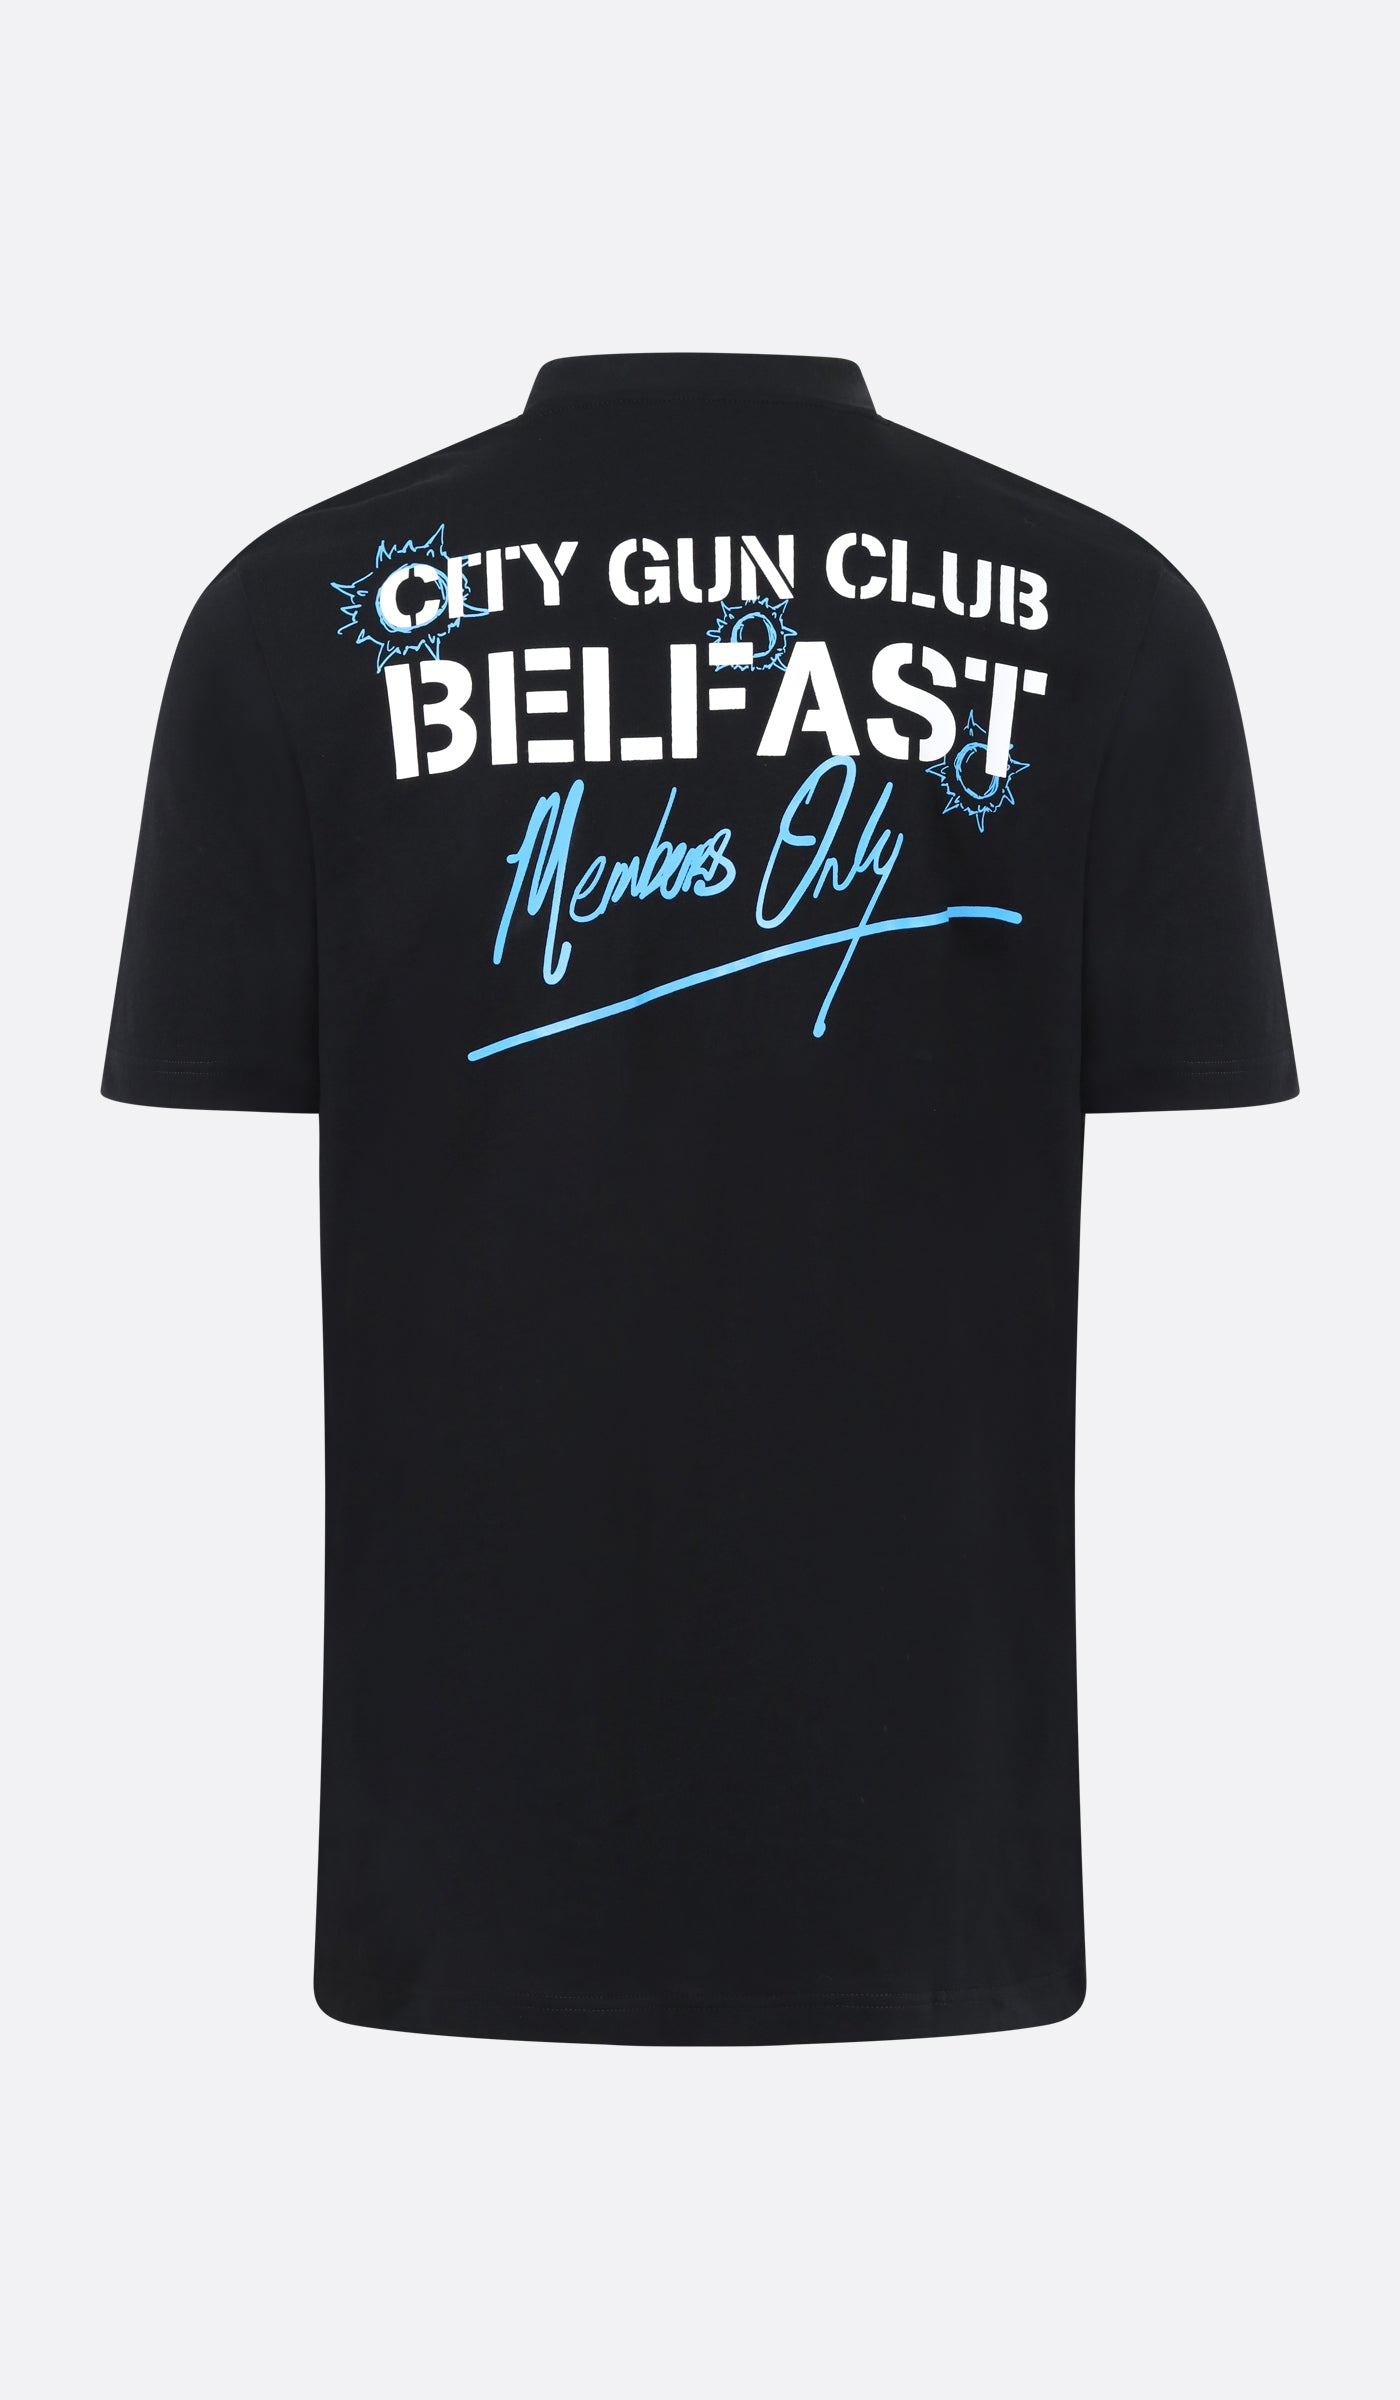 DJK Belfast Gun Club T-Shirt